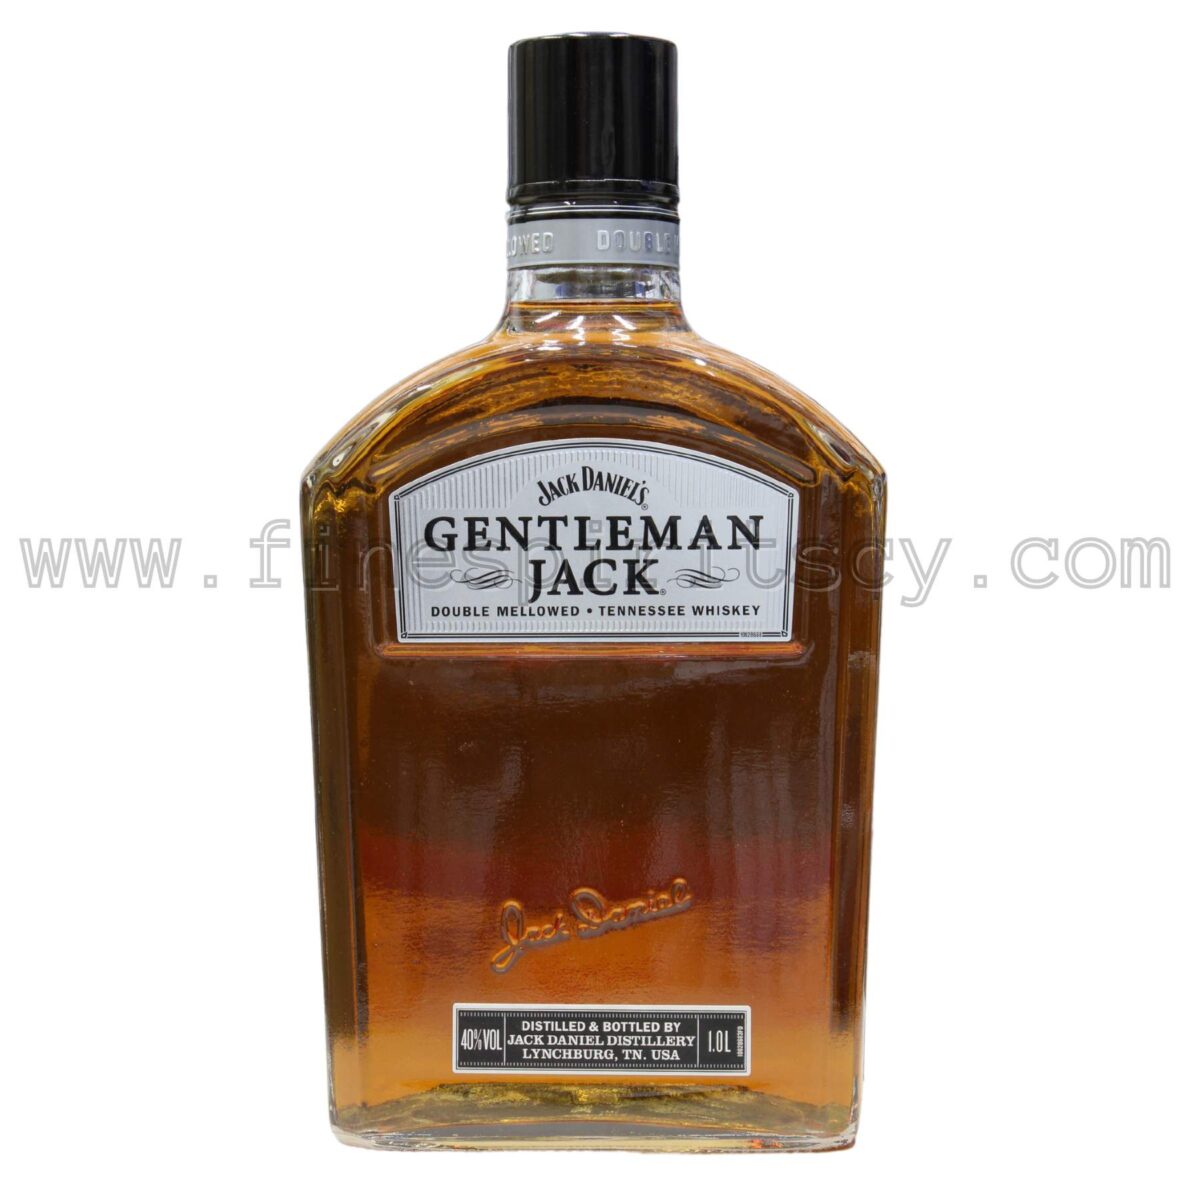 Jack Daniels 100 Proof Bottled-in-bond Tennessee Whiskey 100cl